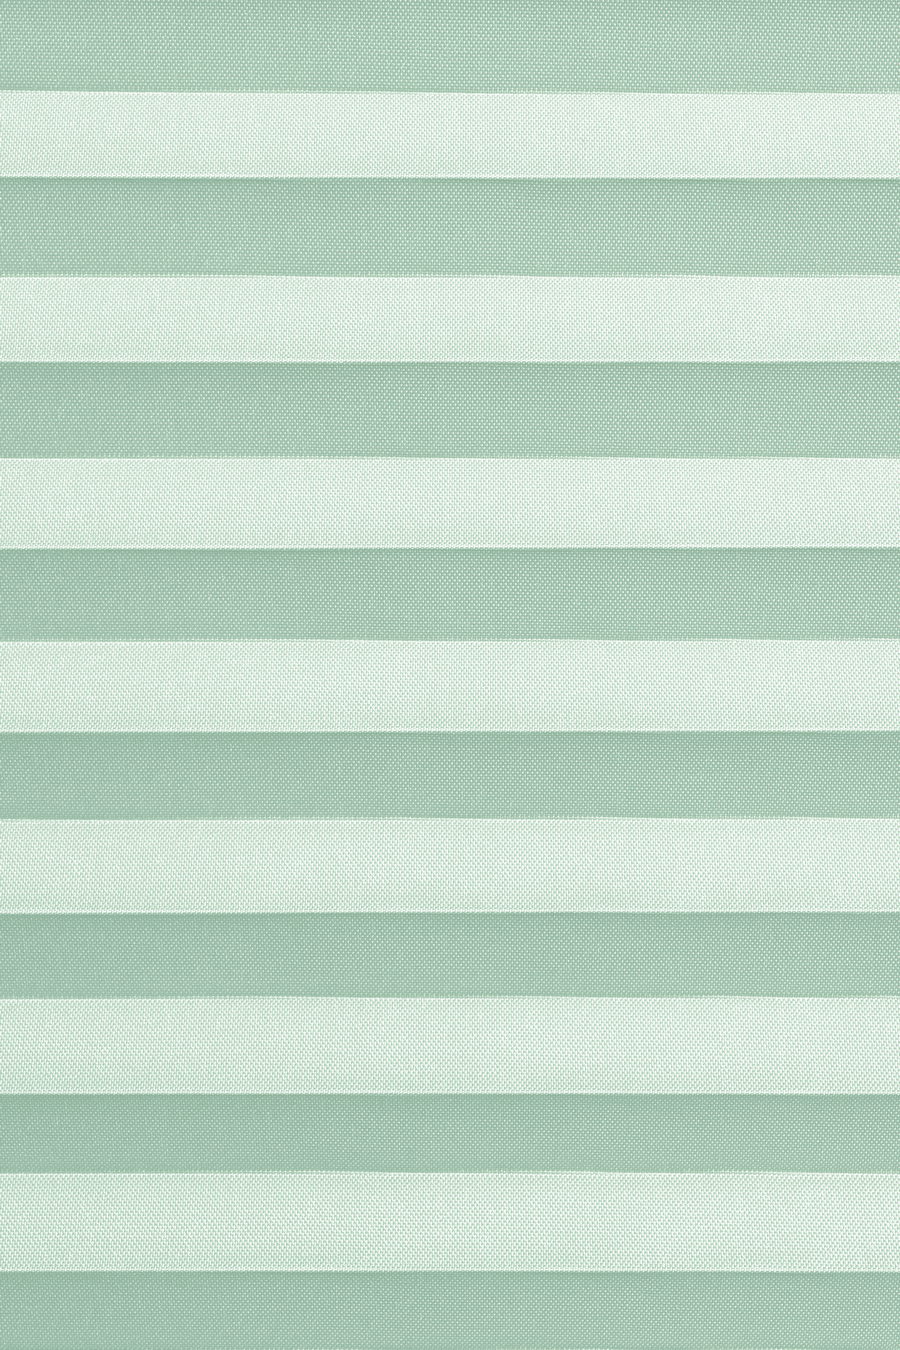 Ткань ALLEGRO PEARL sea green 5456 для штор плиссе